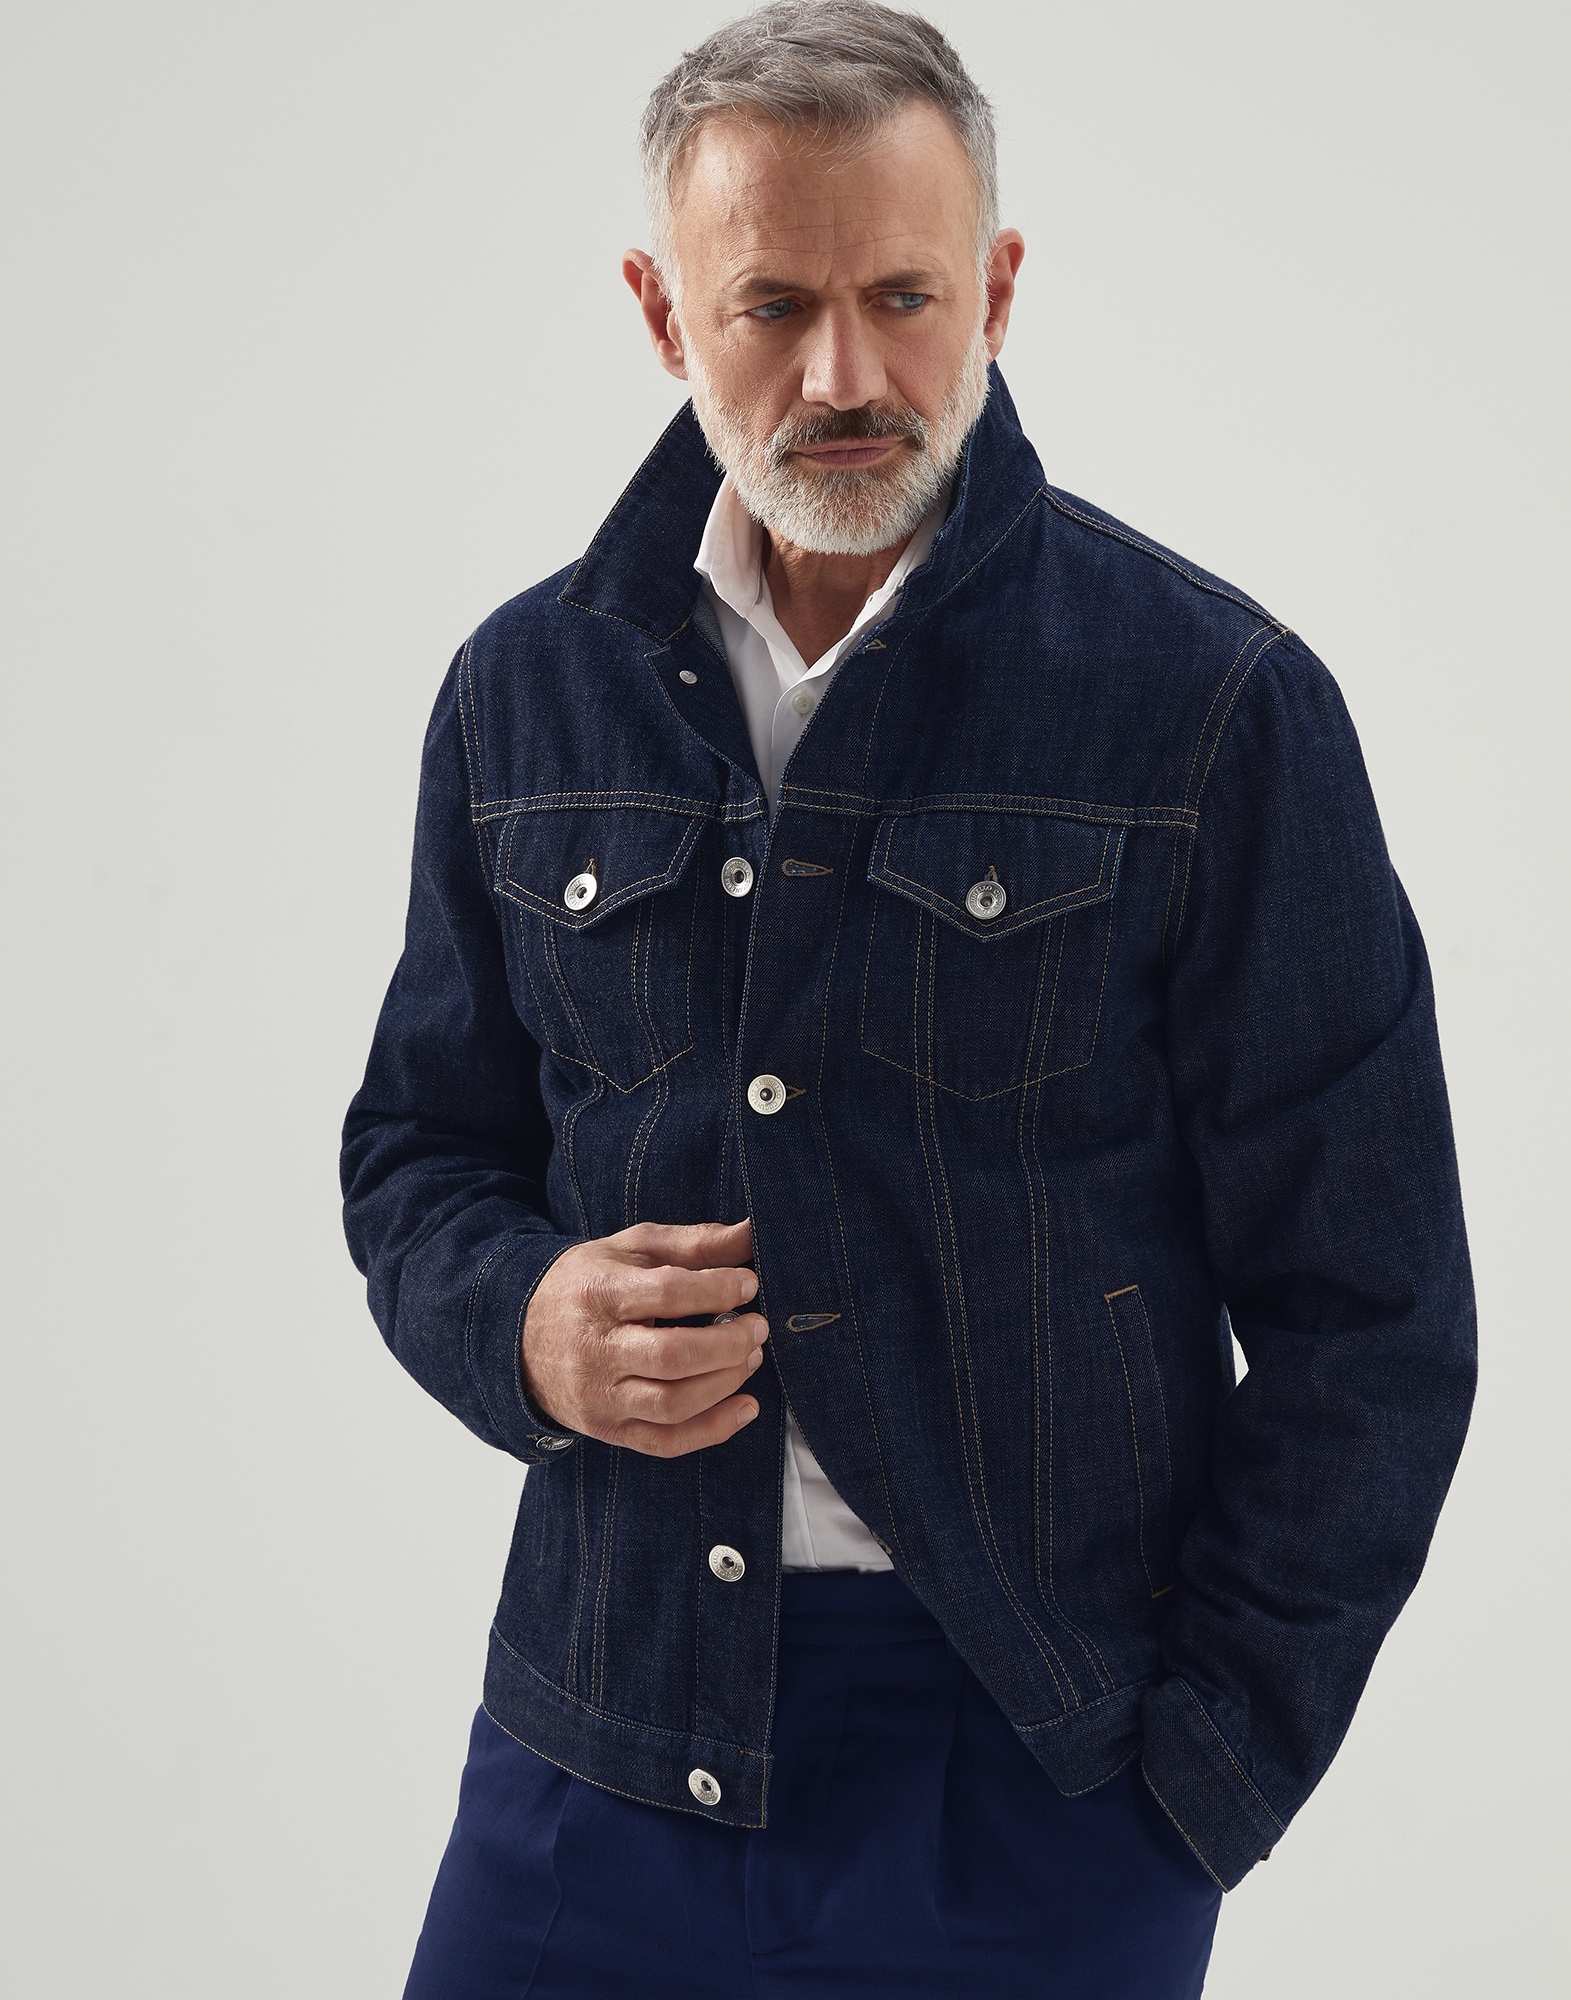 Men's coats and jackets - Designer outerwear | Brunello Cucinelli